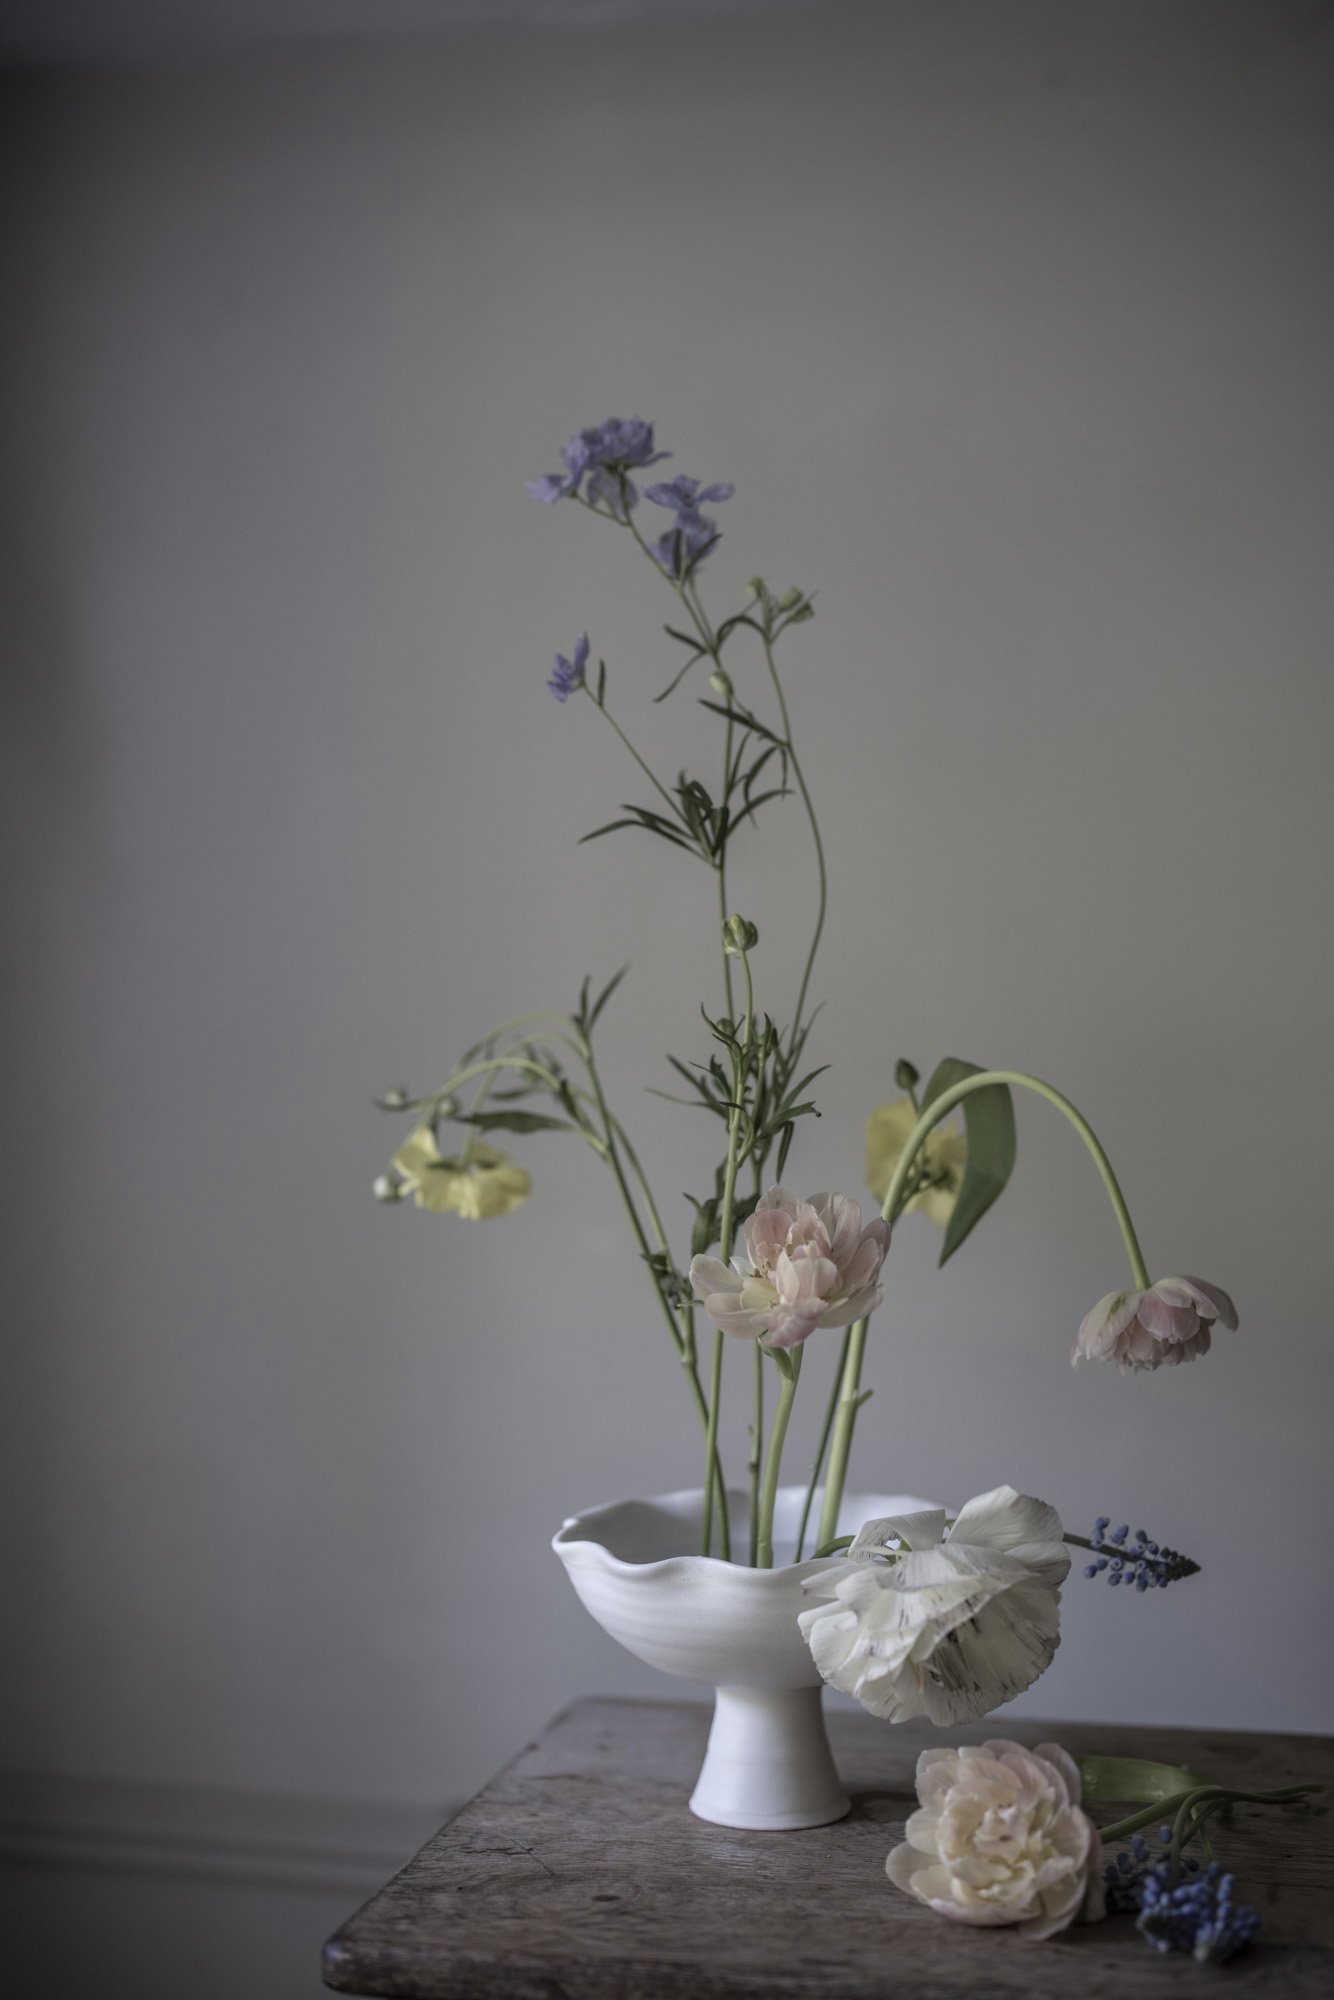 Paper-thin-moon-flower-frog-bowl-6.jpg